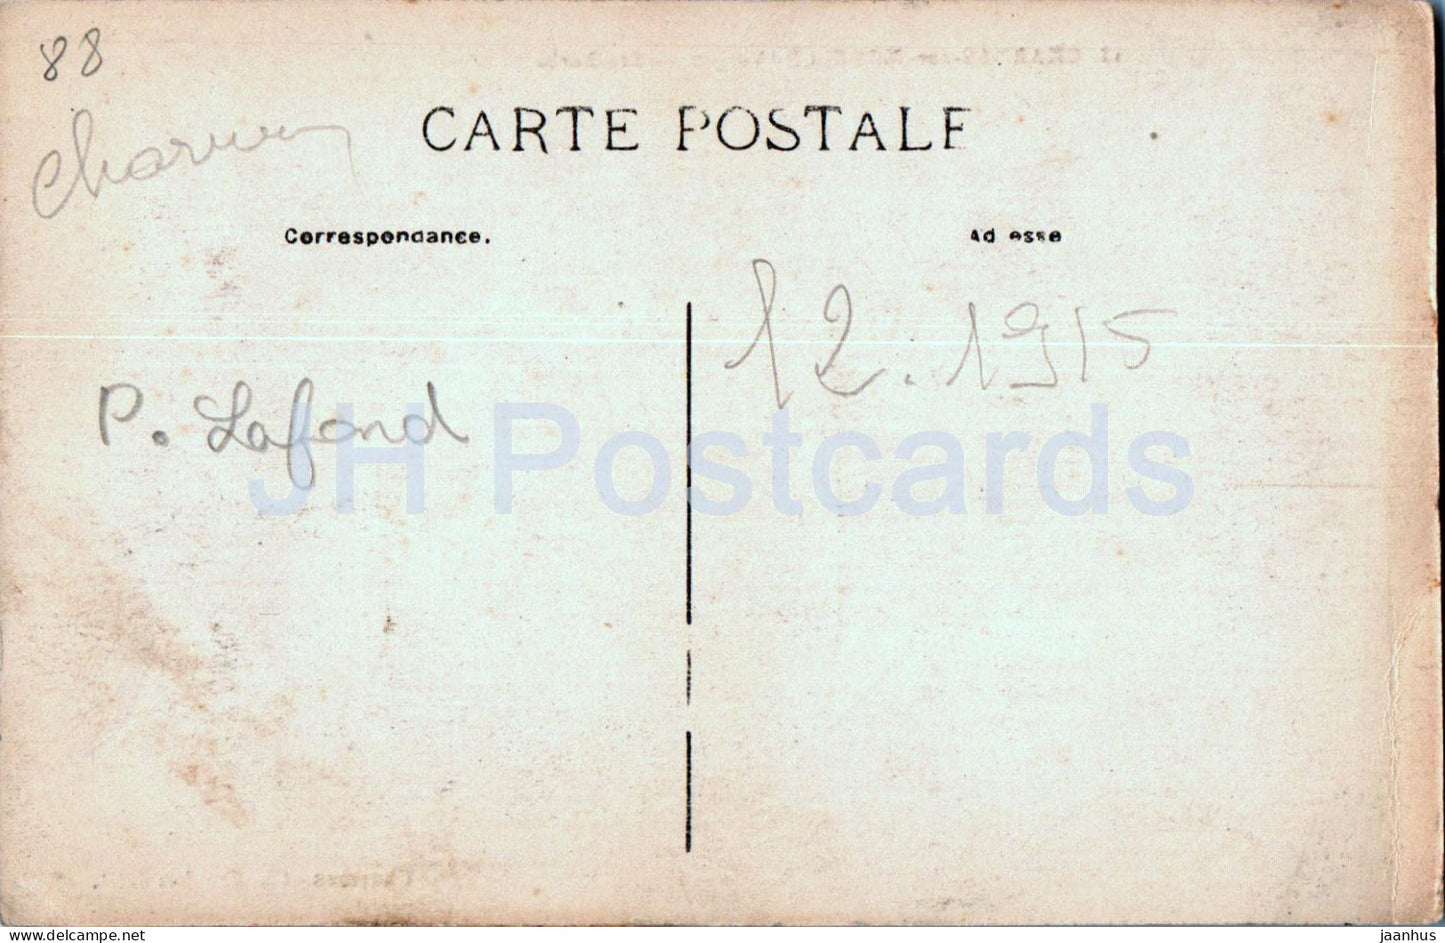 Charmes sur Moselle - Ste Barbe - 13 - alte Postkarte - 1915 - Frankreich - gebraucht 